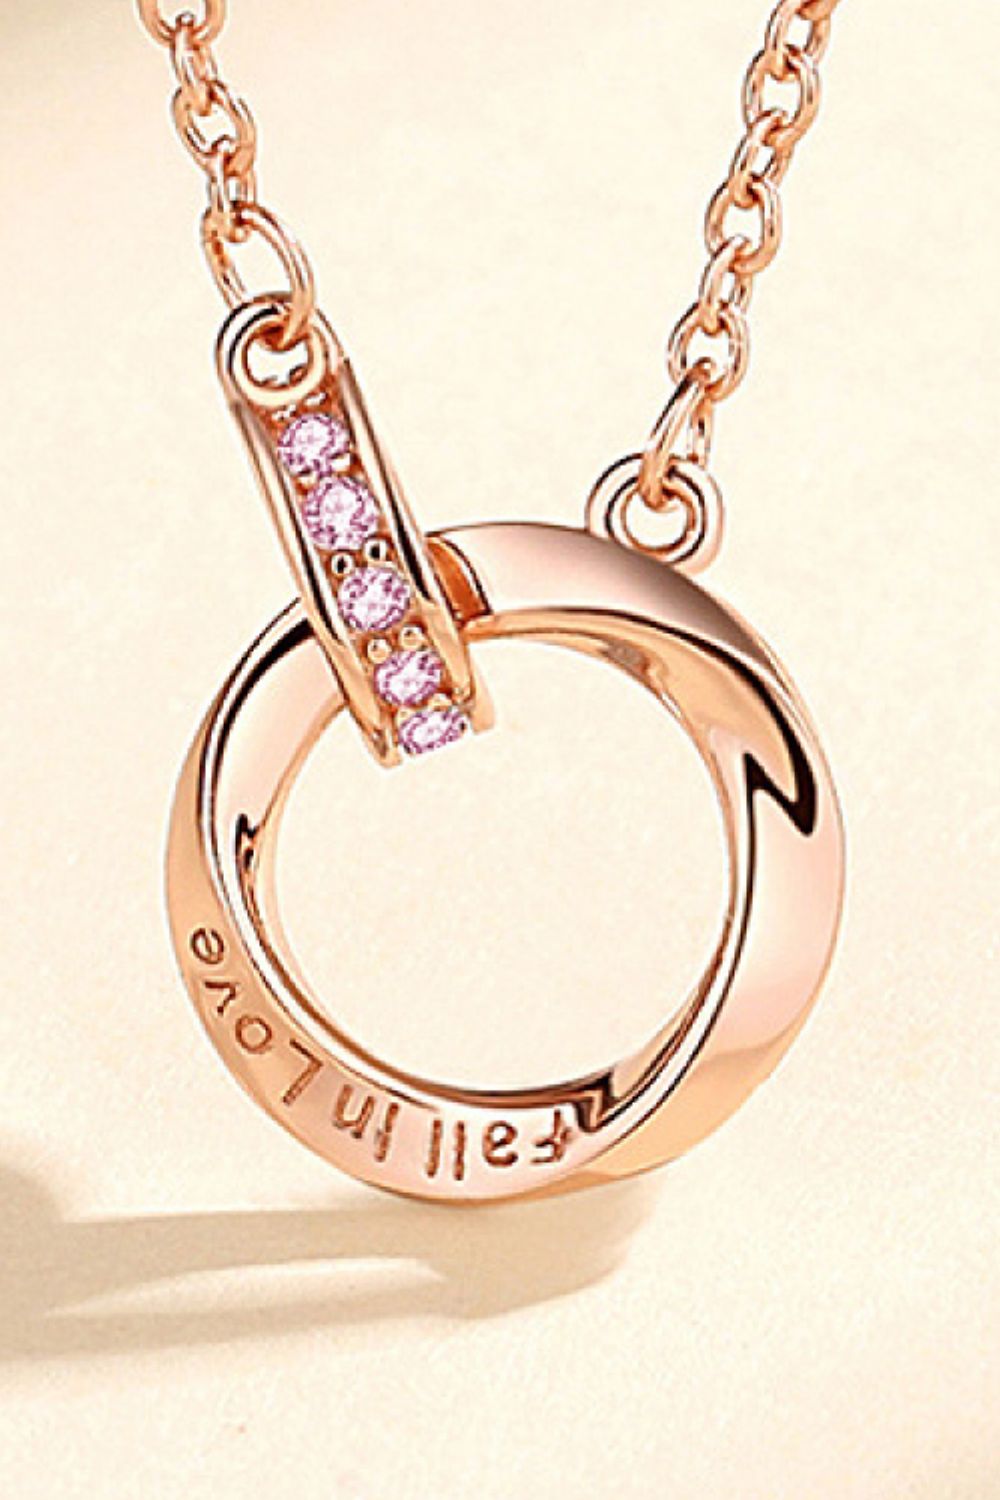 Zircon Decor 999 Sterling Silver Necklace